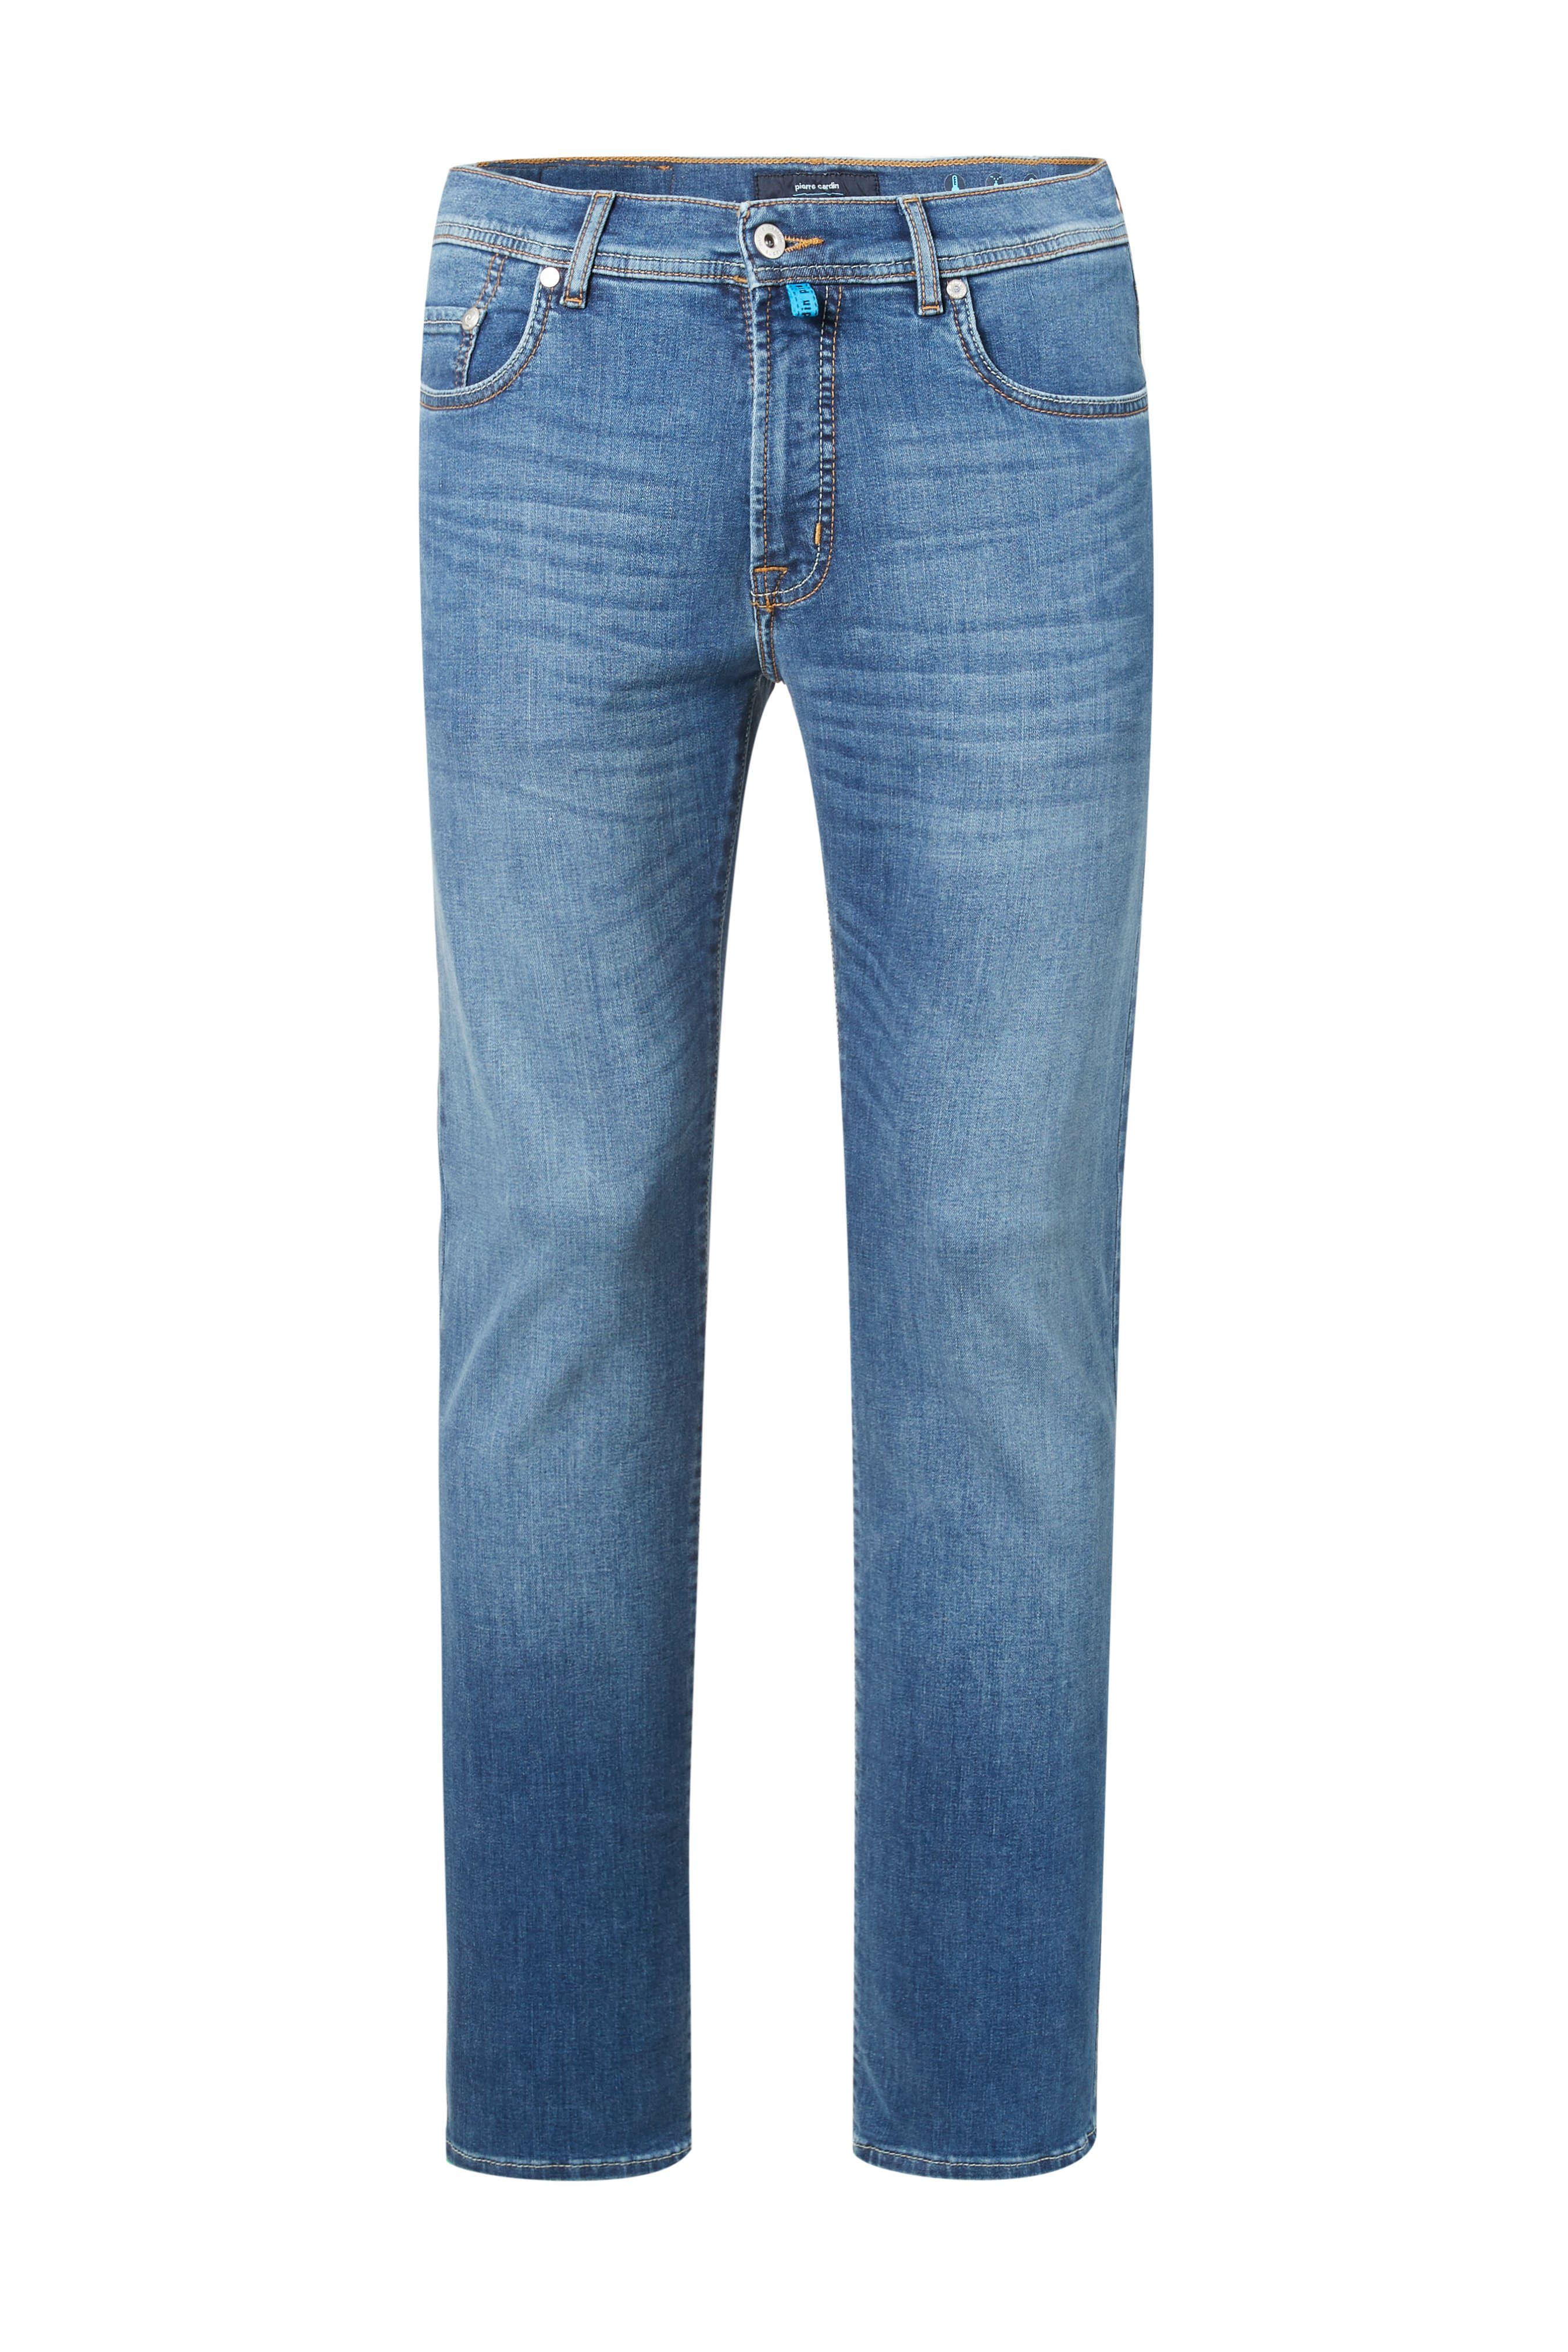 Pierre Cardin 5-Pocket-Jeans PIERRE CARDIN blue 30915 out LYON 7719.03 retro CLIMA - CONTROL washed